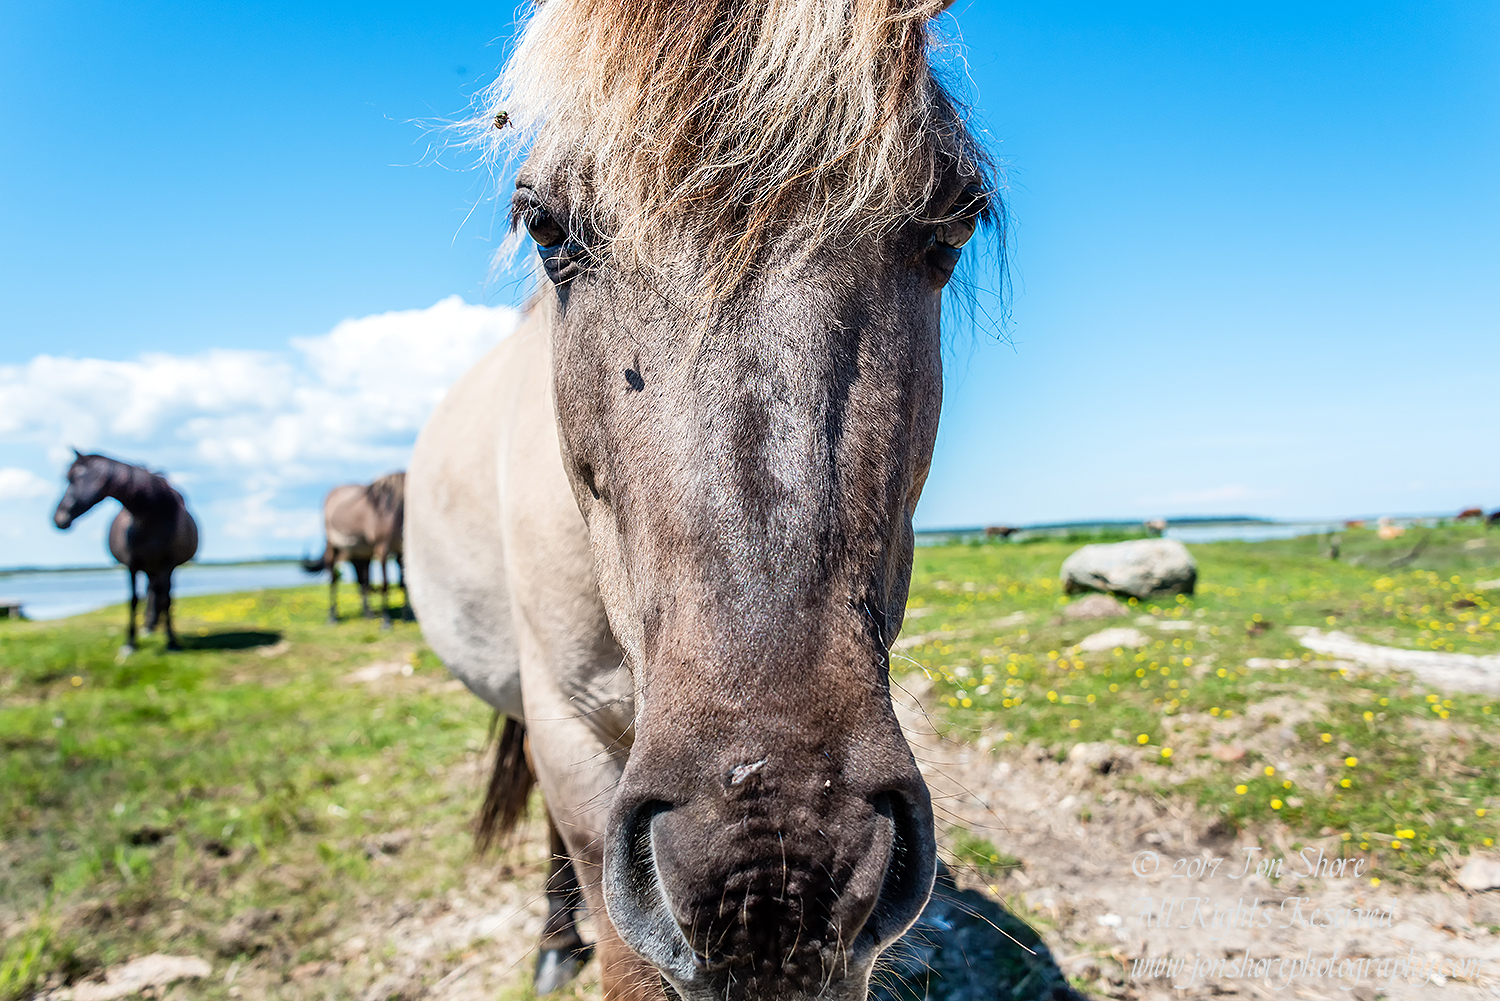 Wild Horse Engure Lake Latvia June 2017 by Jon Shore. Nikkor 28mm